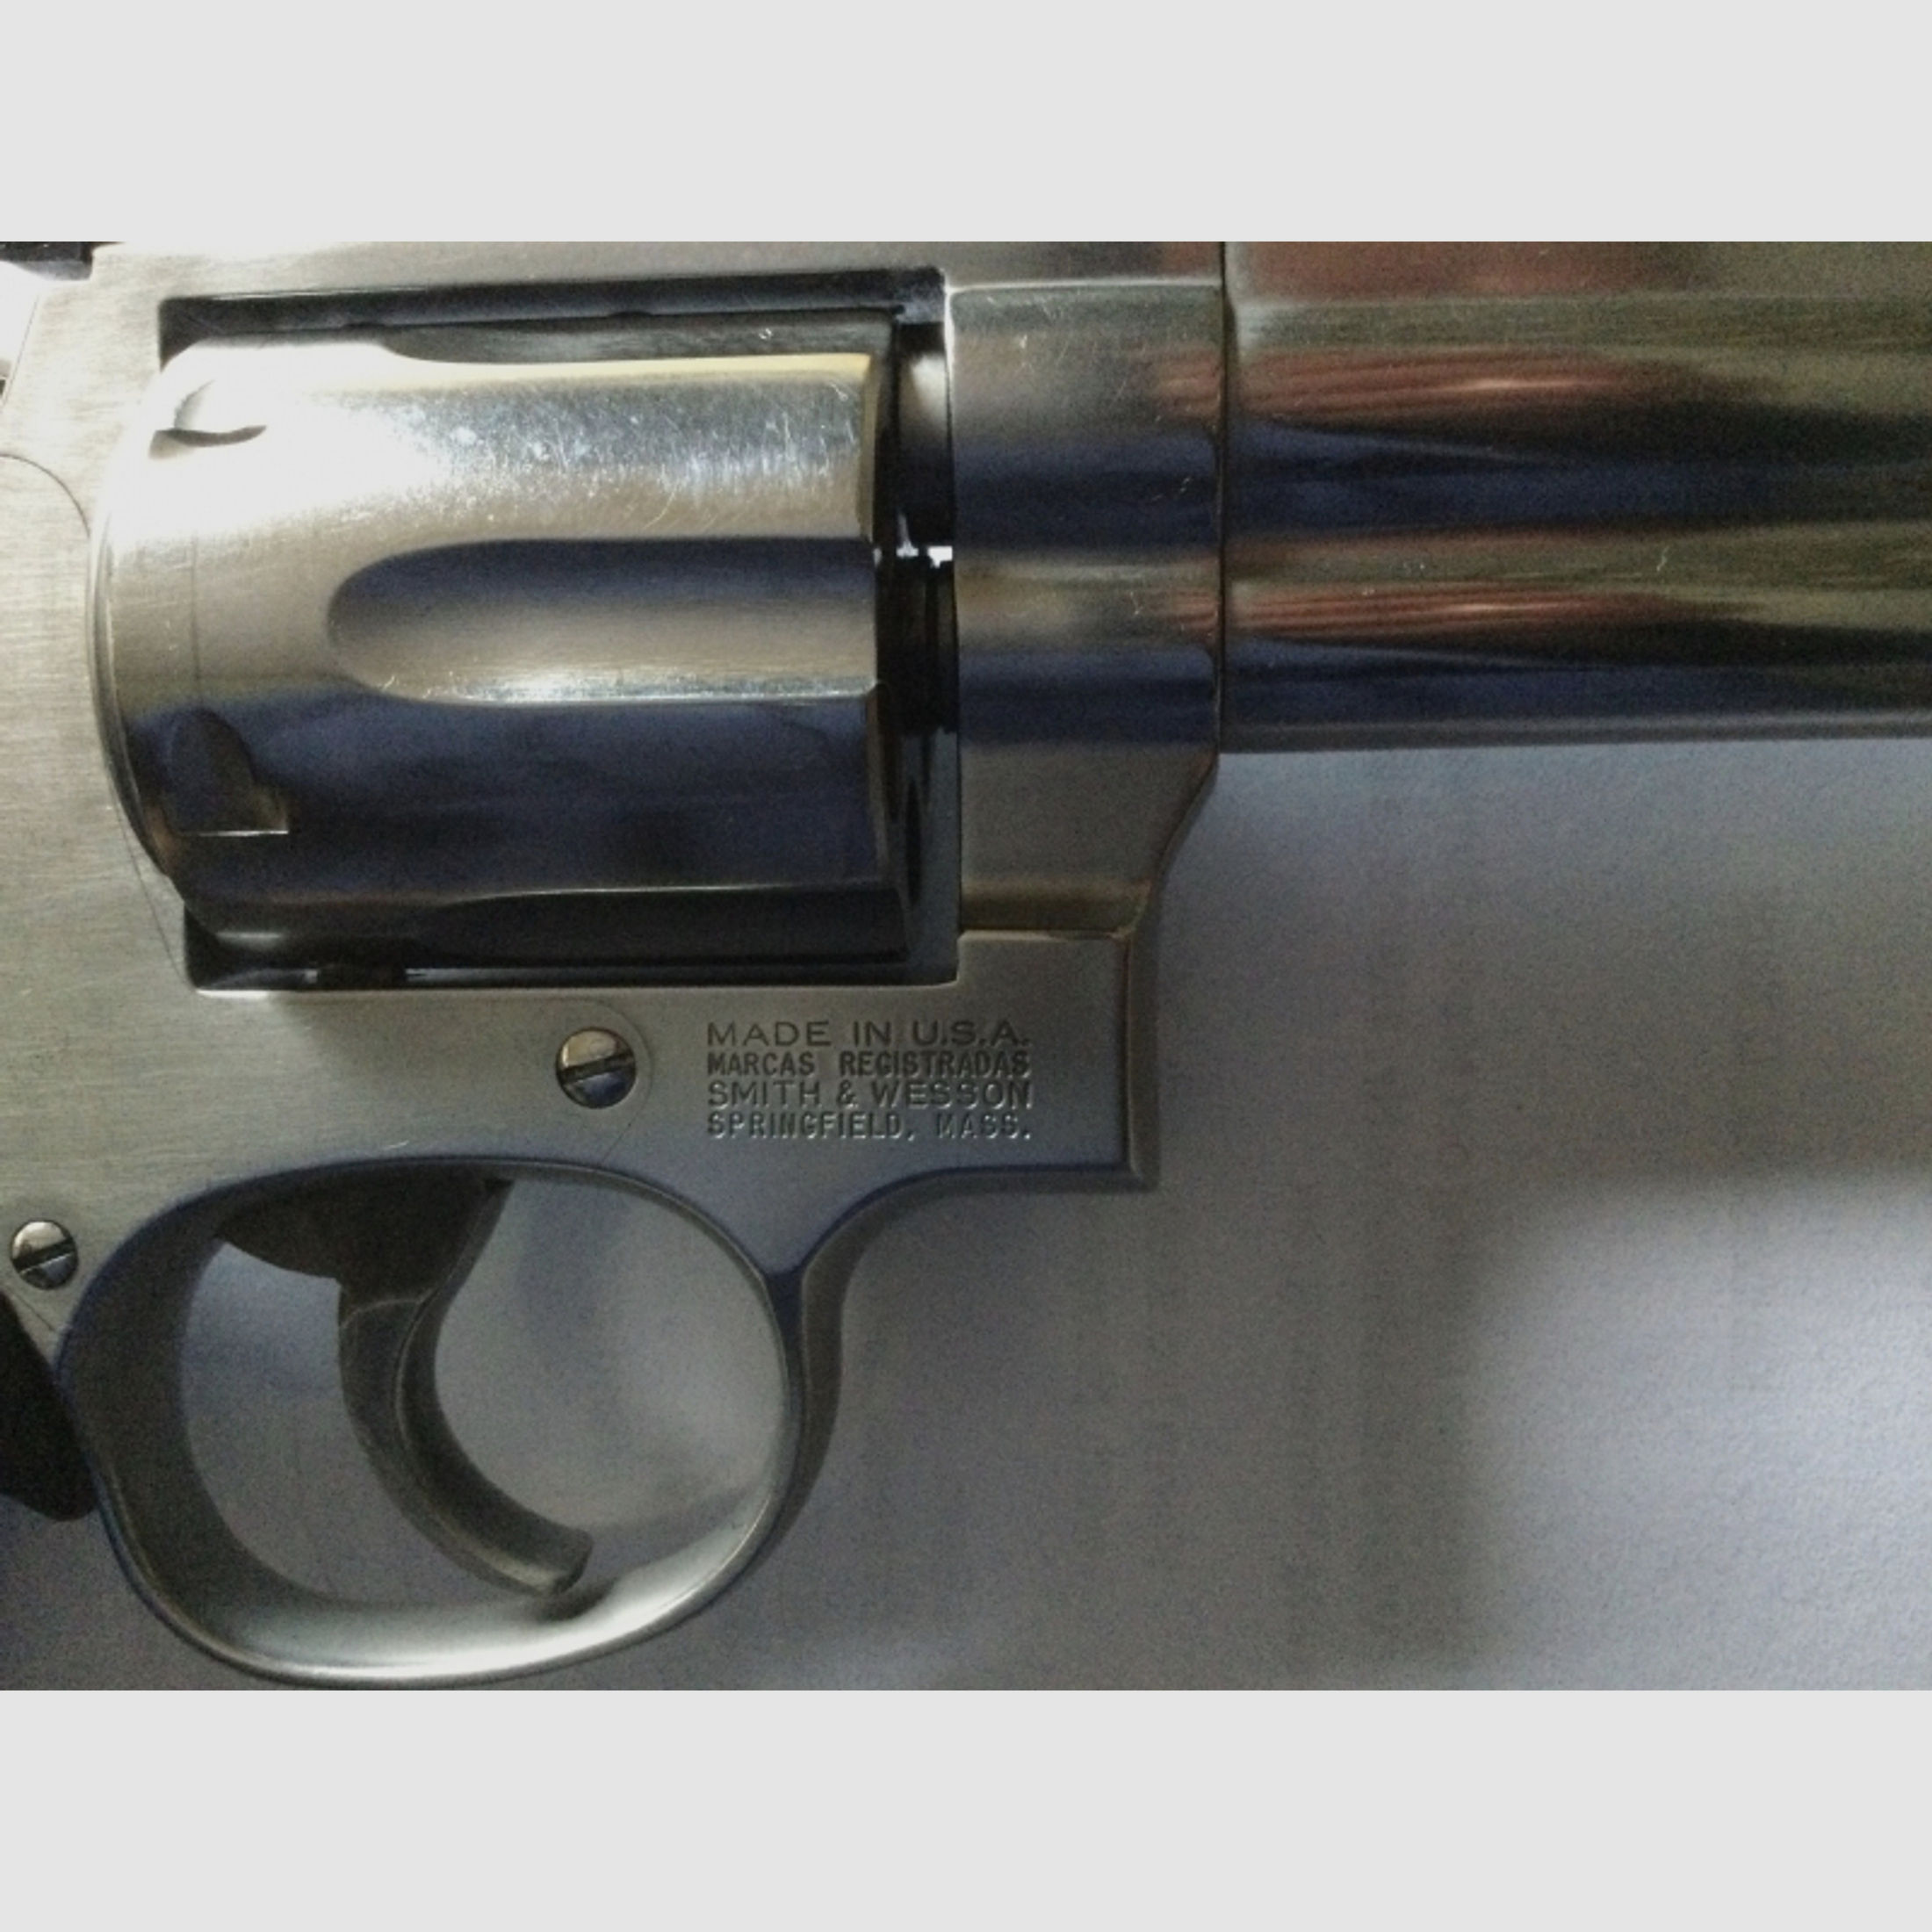 Revolver Smith &Wesson 357 Magnum